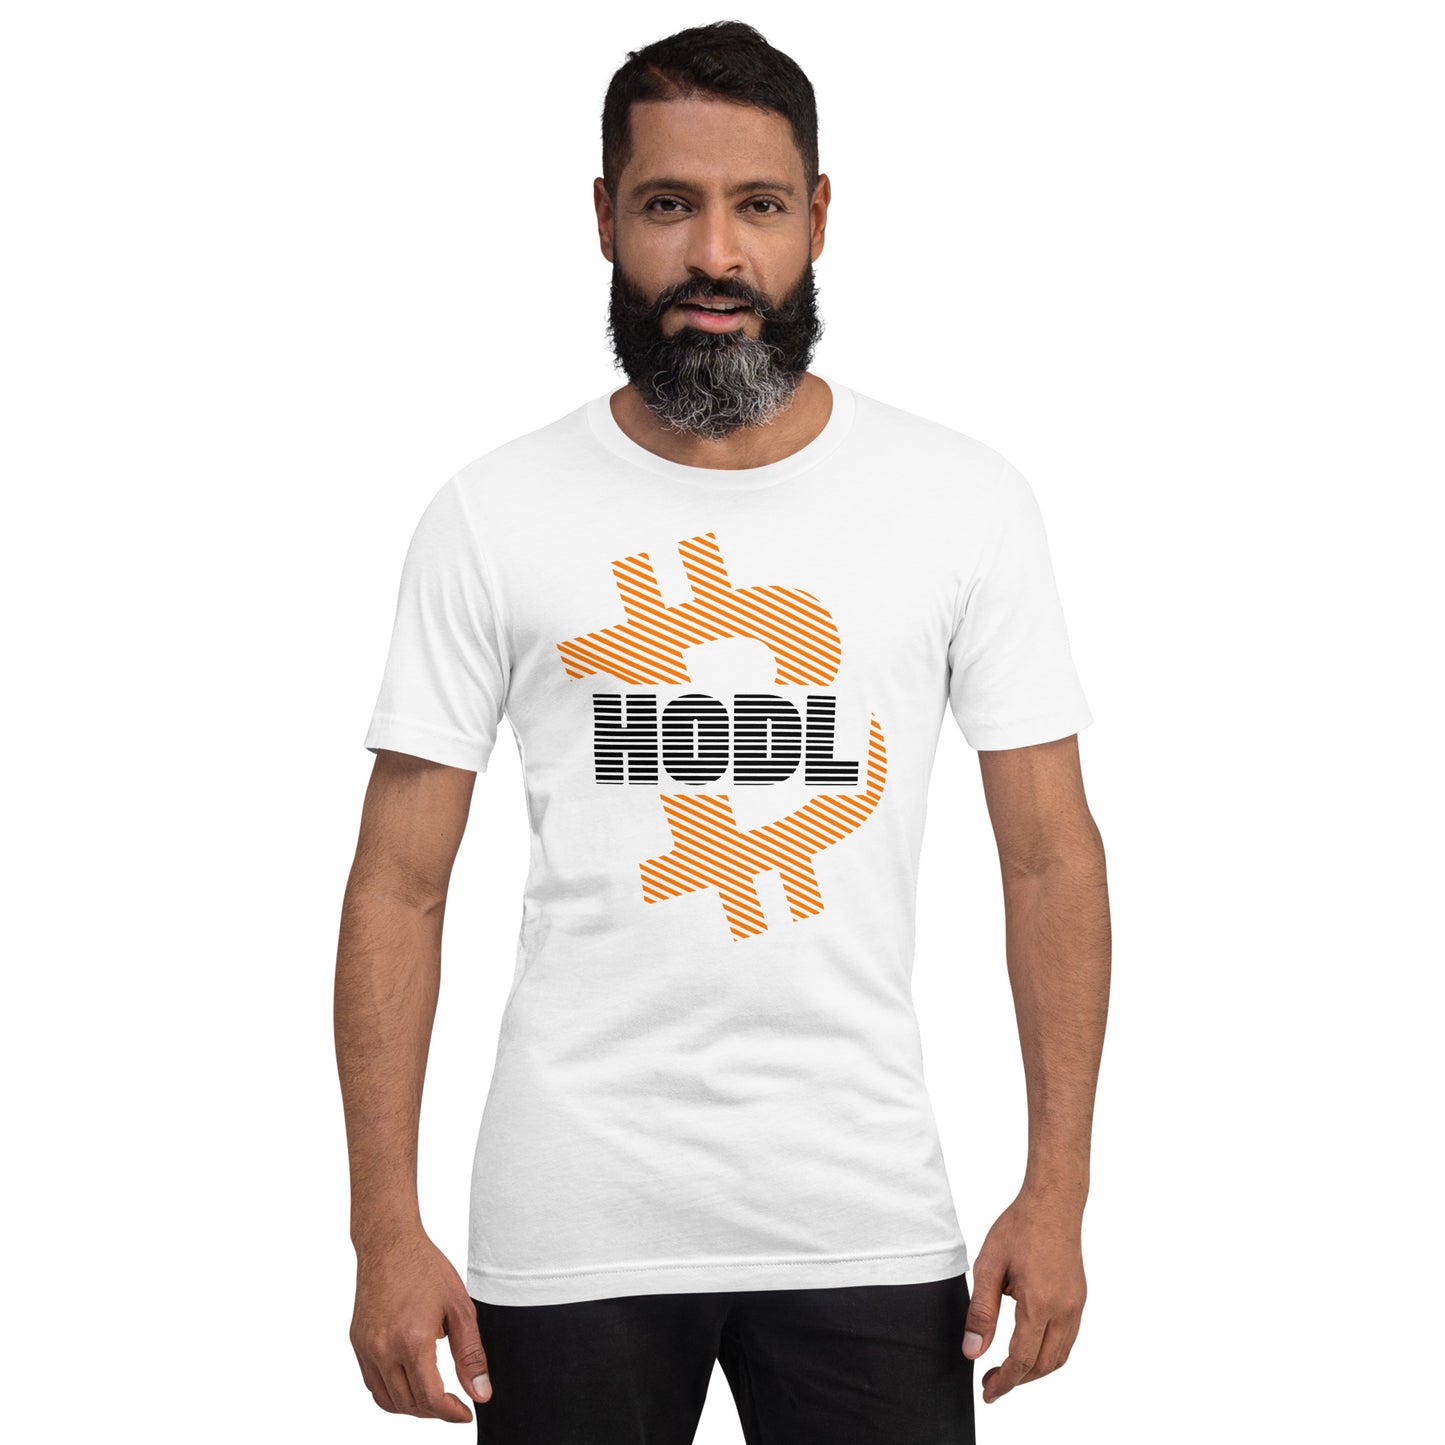 Bitcoin Hodl Stripes